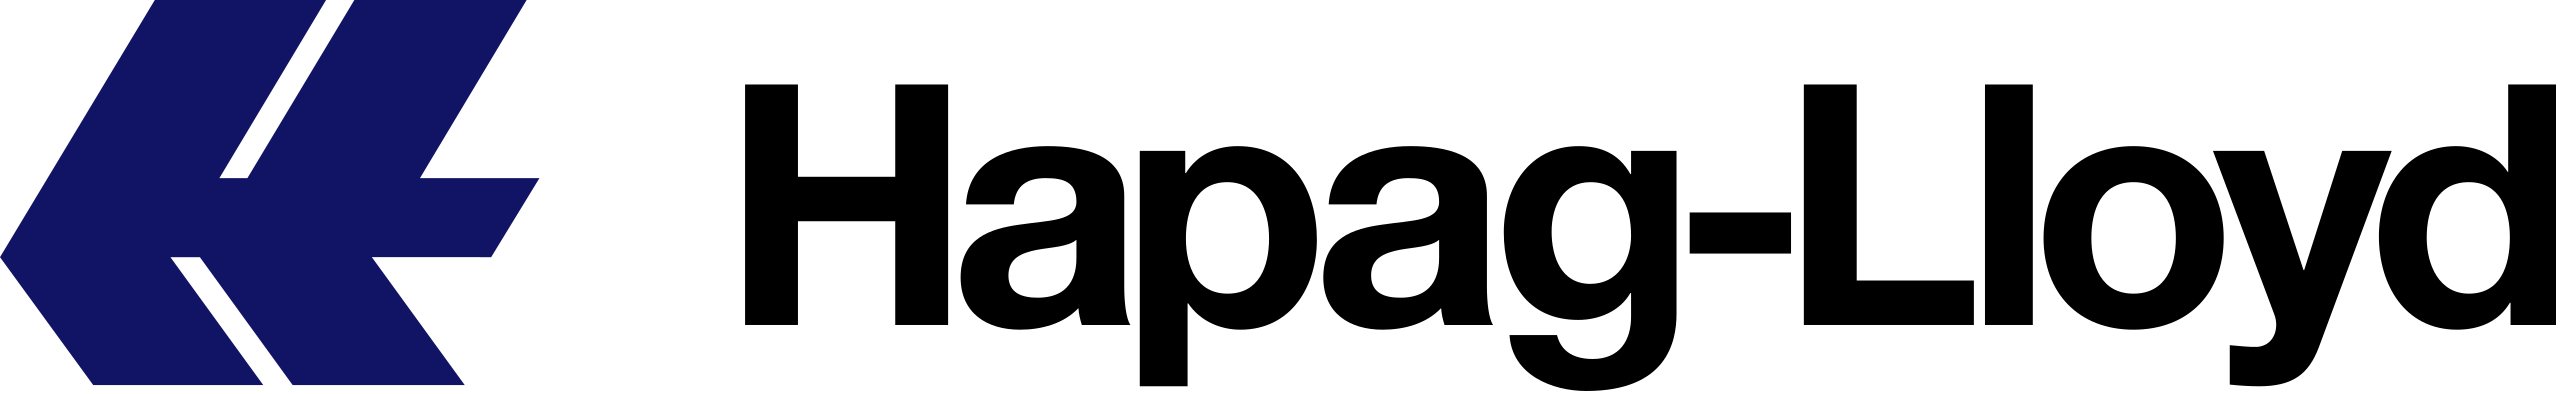 Hapag Lloyd logo